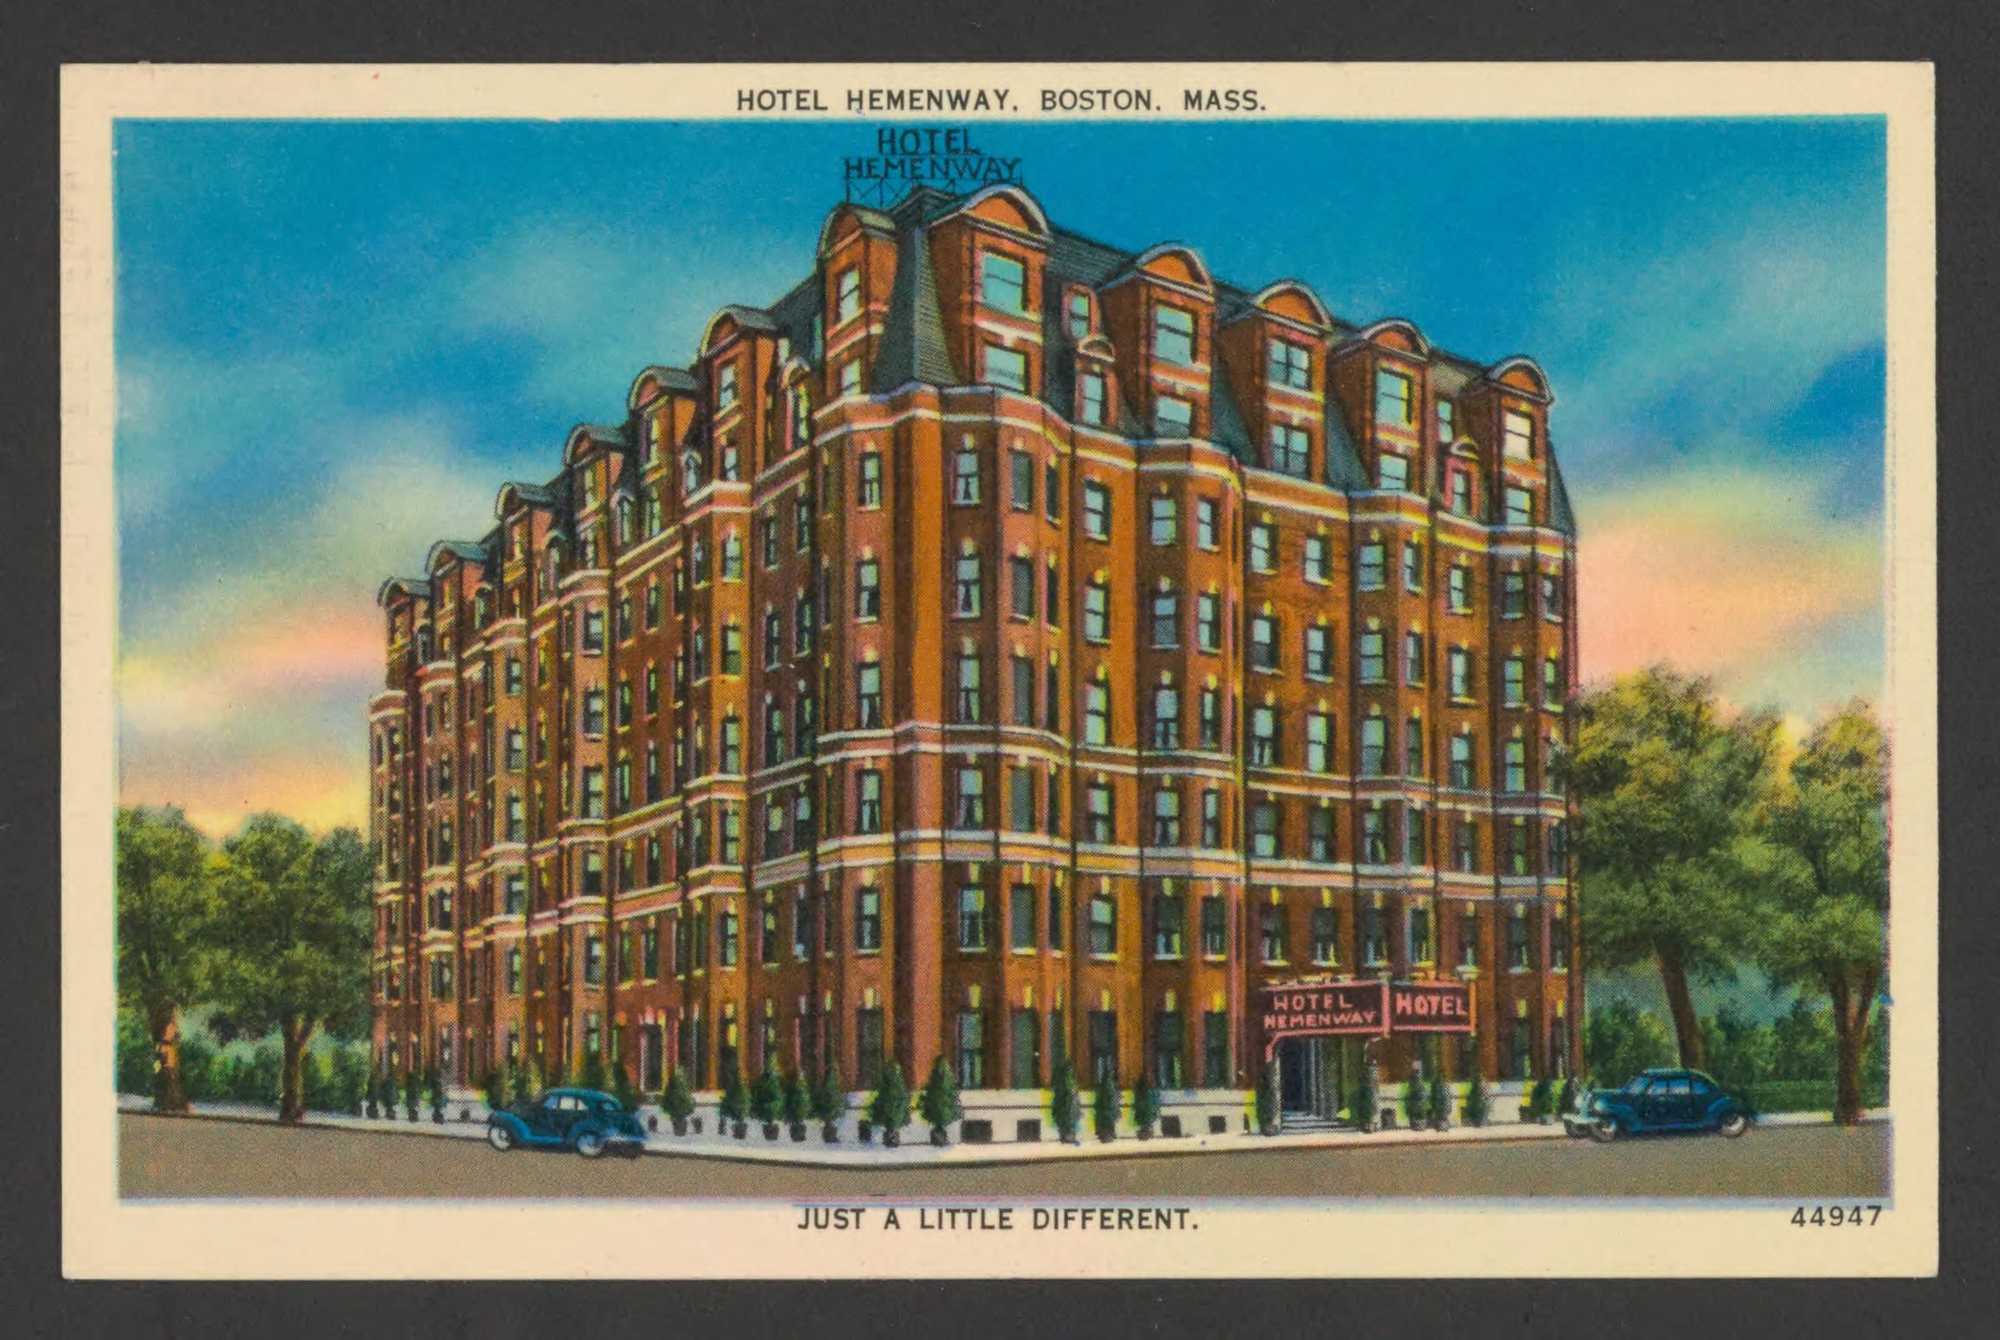 A 1940 postcard depicting the Hotel Hemenway. 